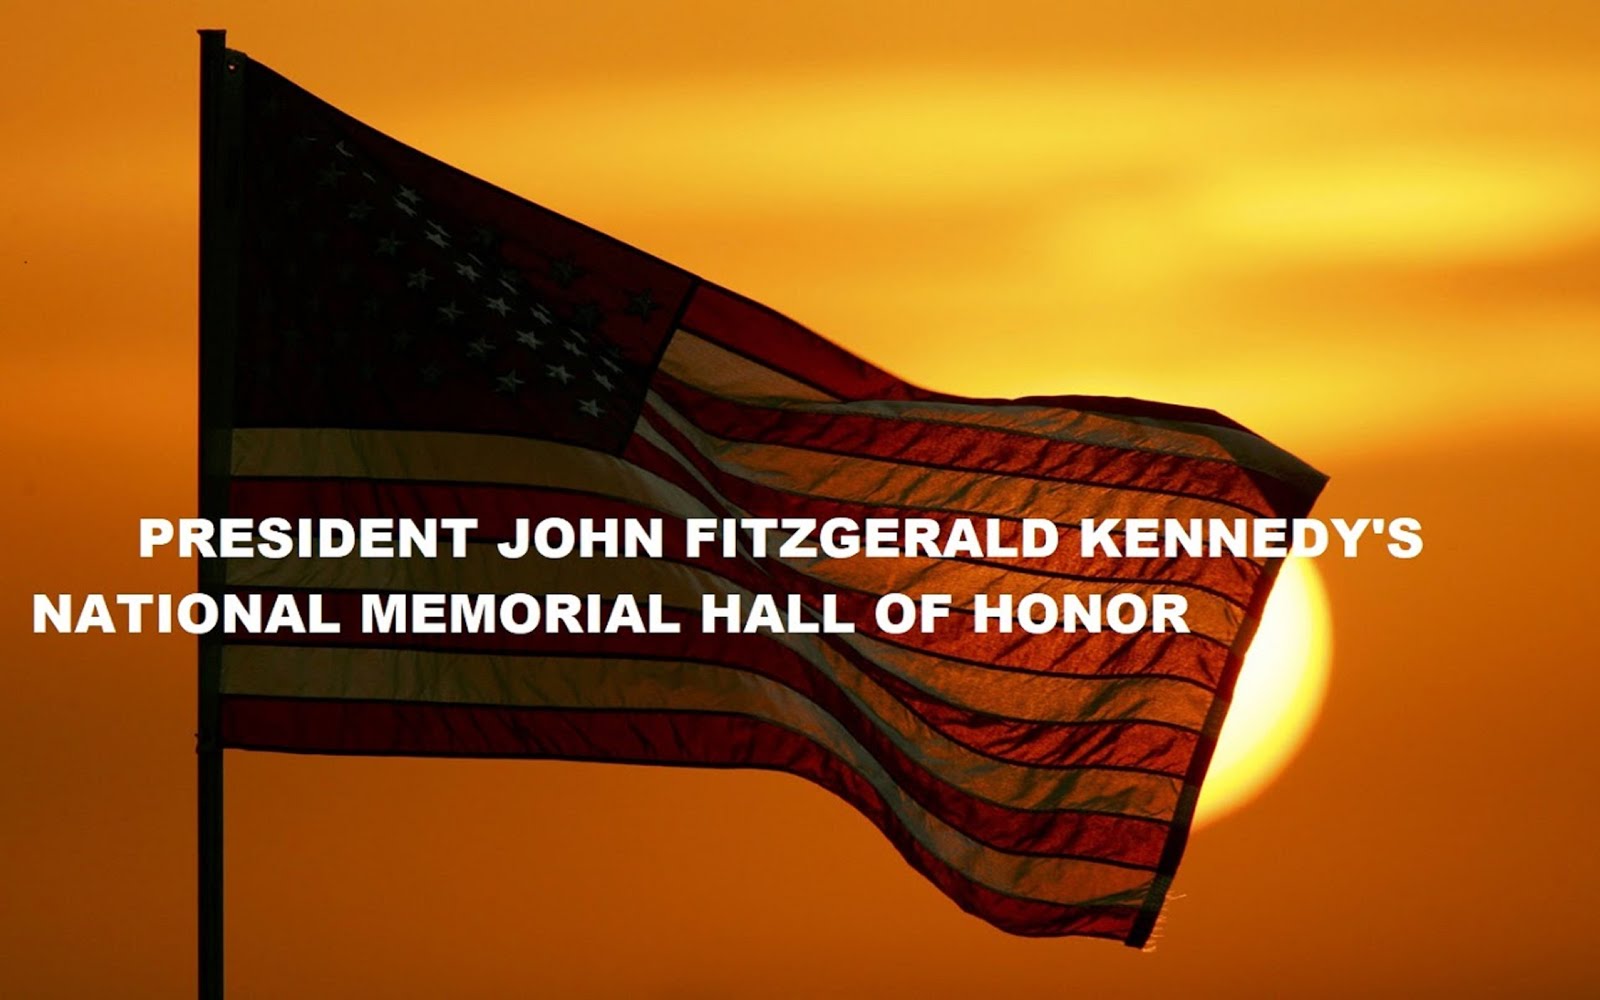 PRESIDENT JOHN FITZGERALD KENNEDY'S NATIONAL MEMORIAL HALL OF HONOR